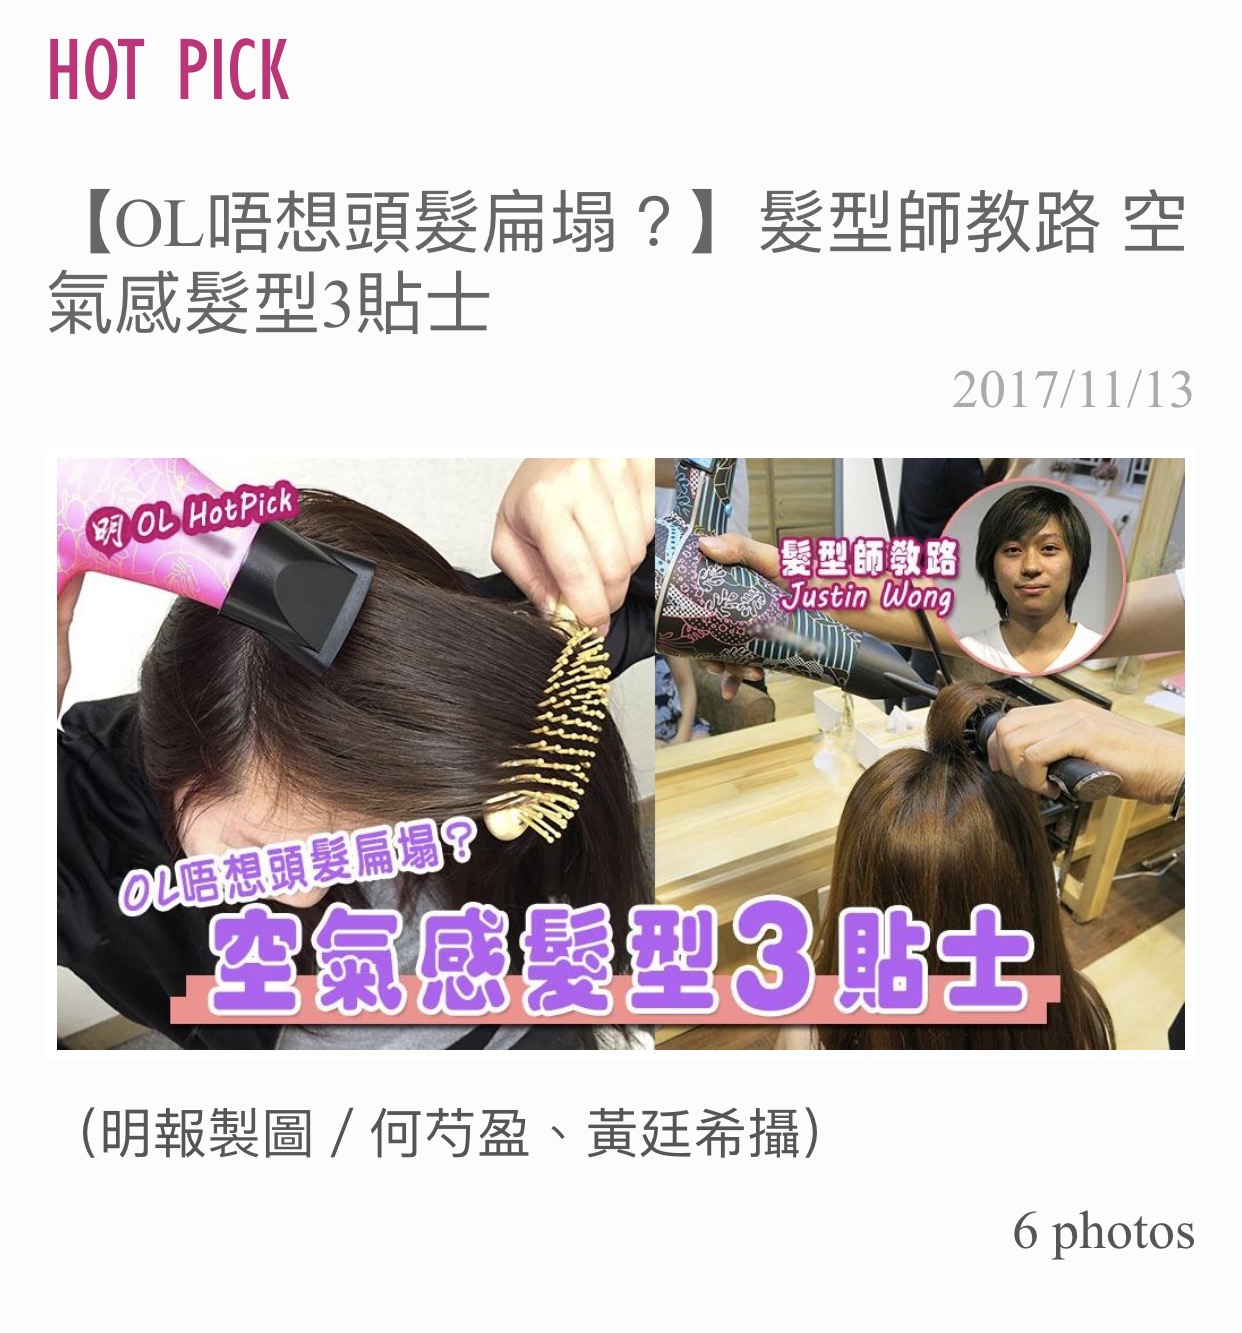 Justin Wong之香港美髮網 HK Hair Salon媒體報導參考: 唔想頭髮扁塌？要睇下la